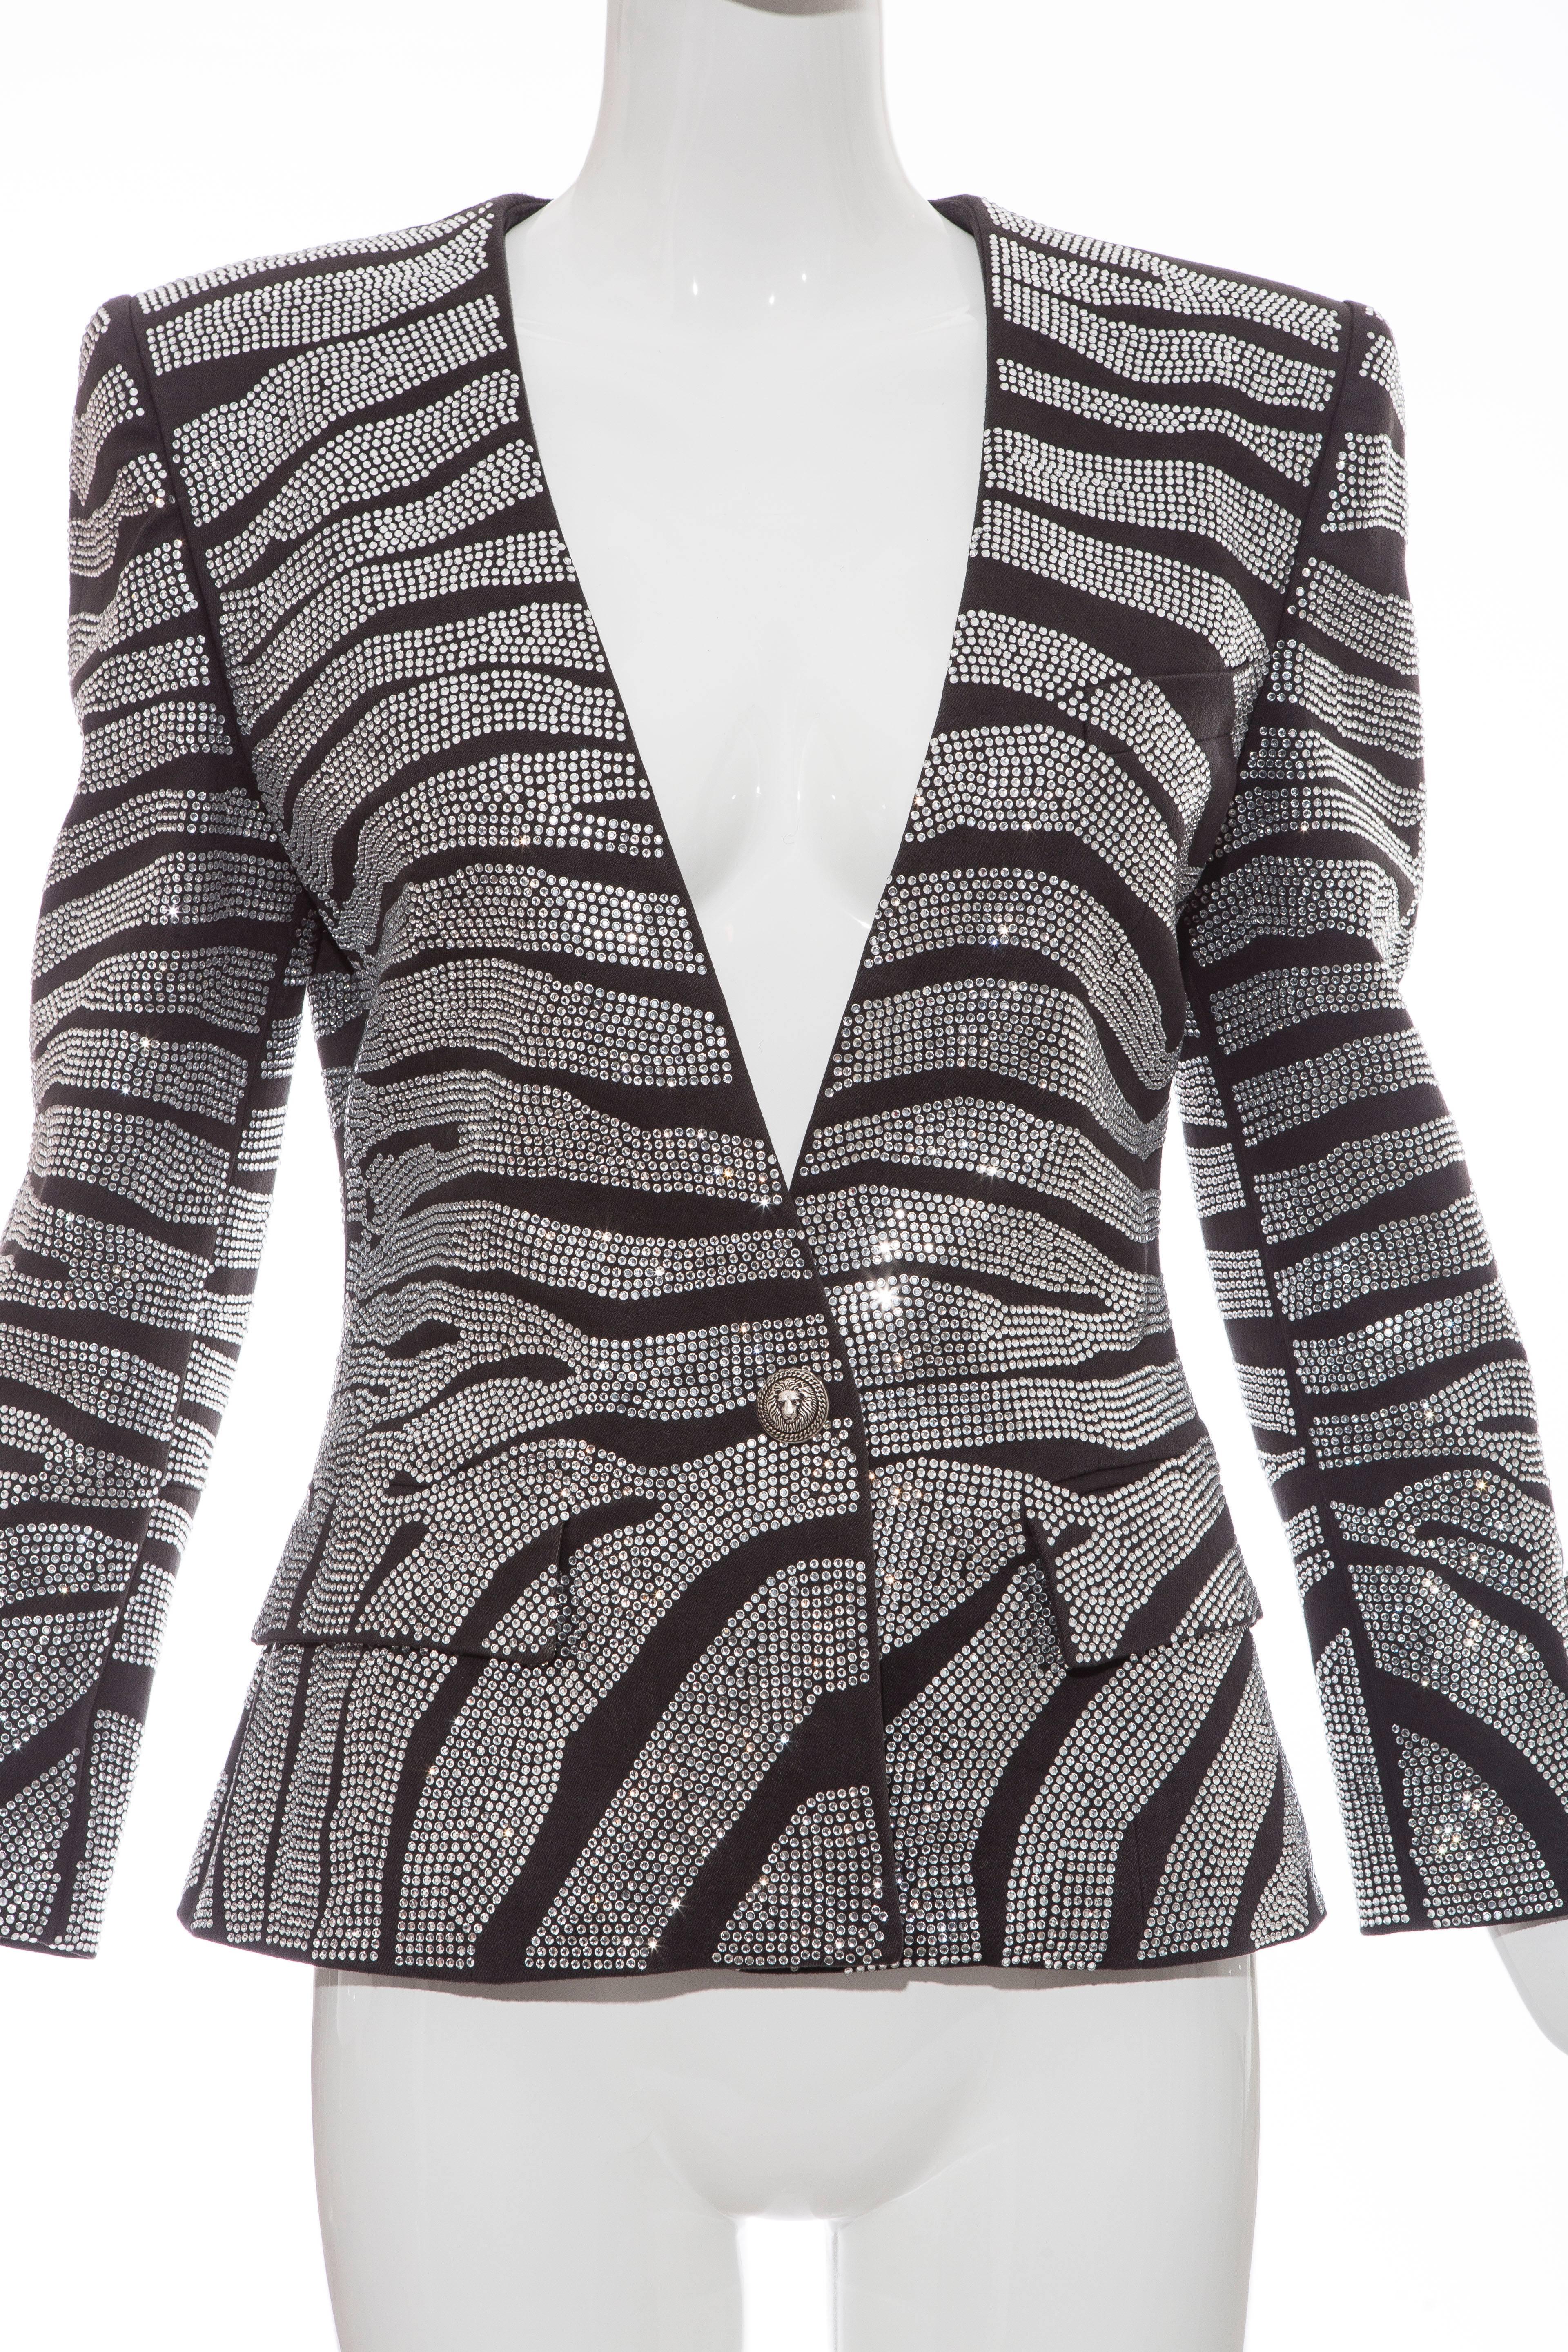 Balmain Crystal Embellished Zebra Print Jacket, Pre-Fall 2014 1